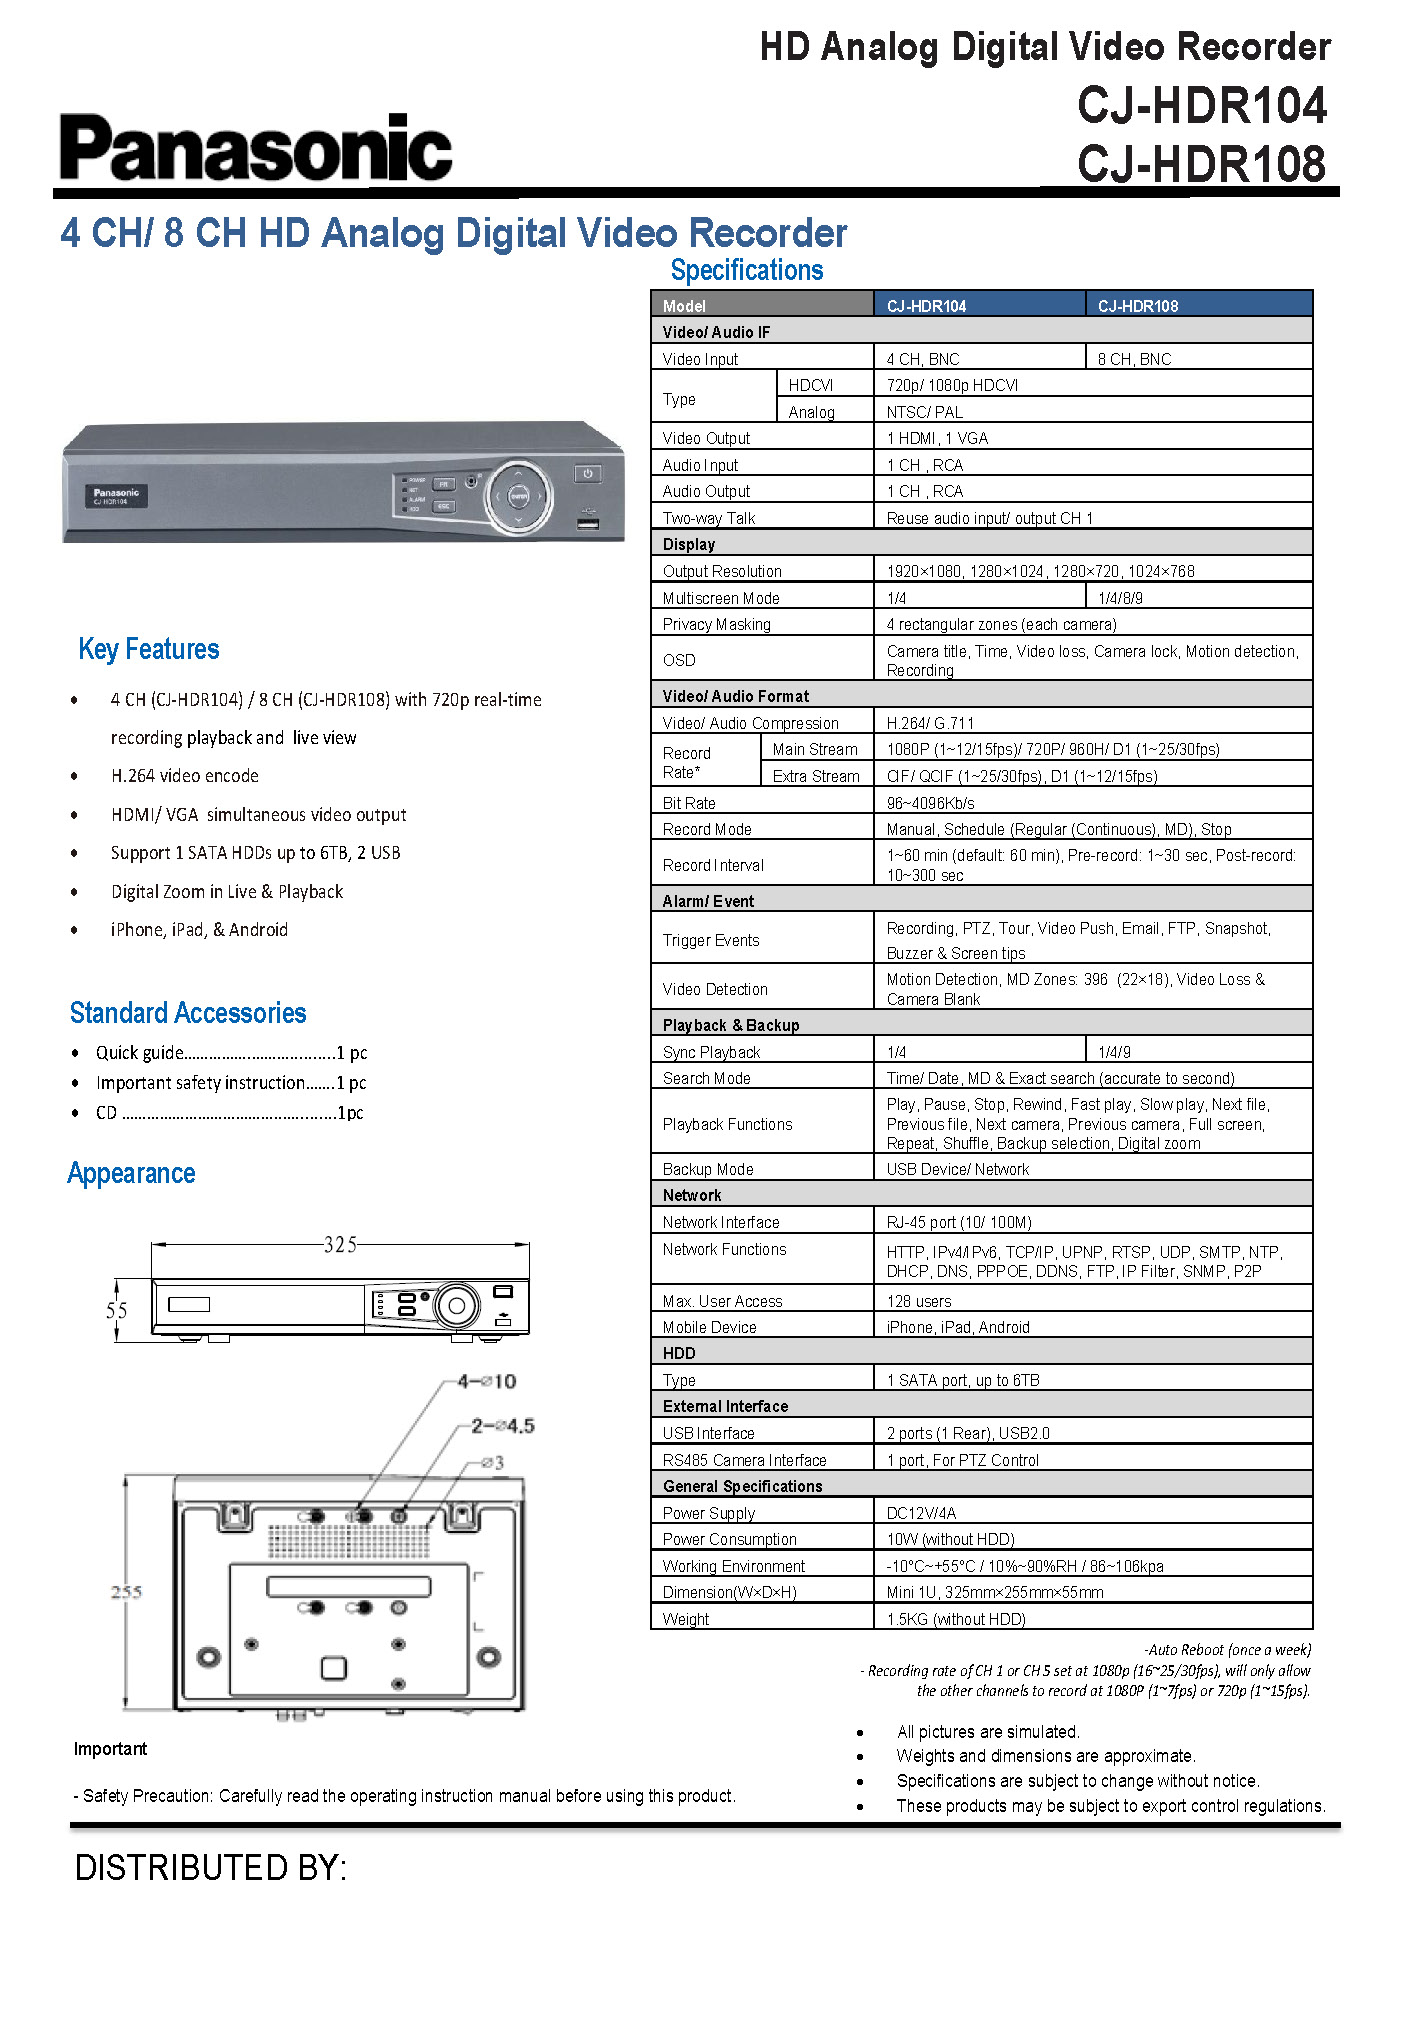 Panasonic CJ-HDR104-108 Series Spec